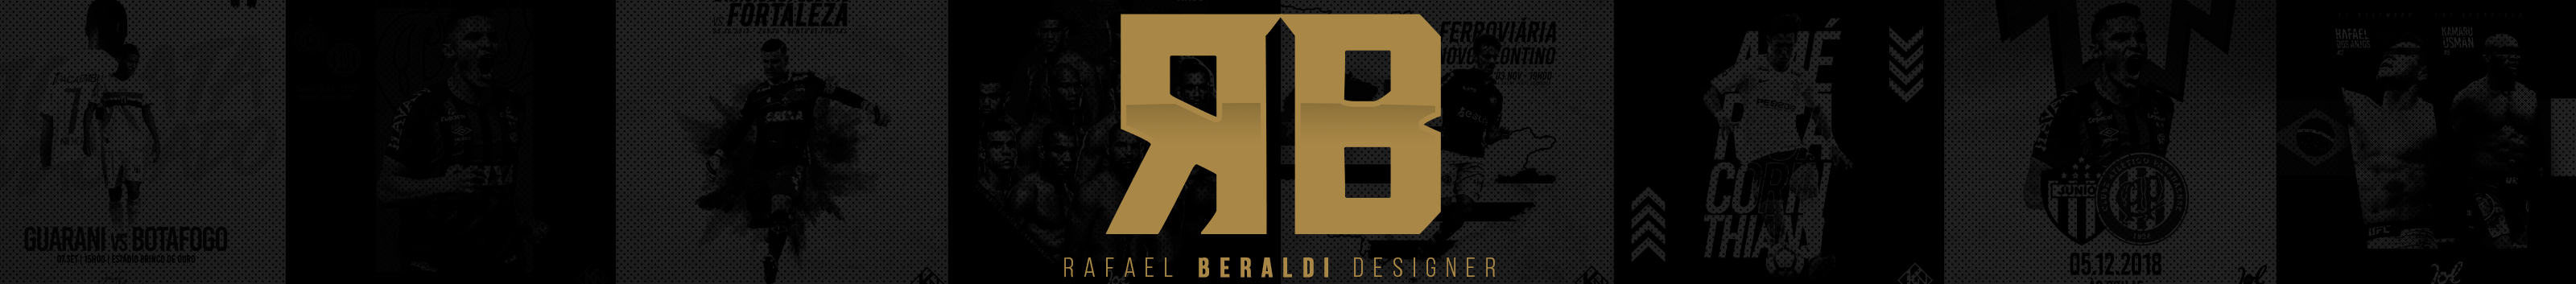 Rafael Beraldi's profile banner